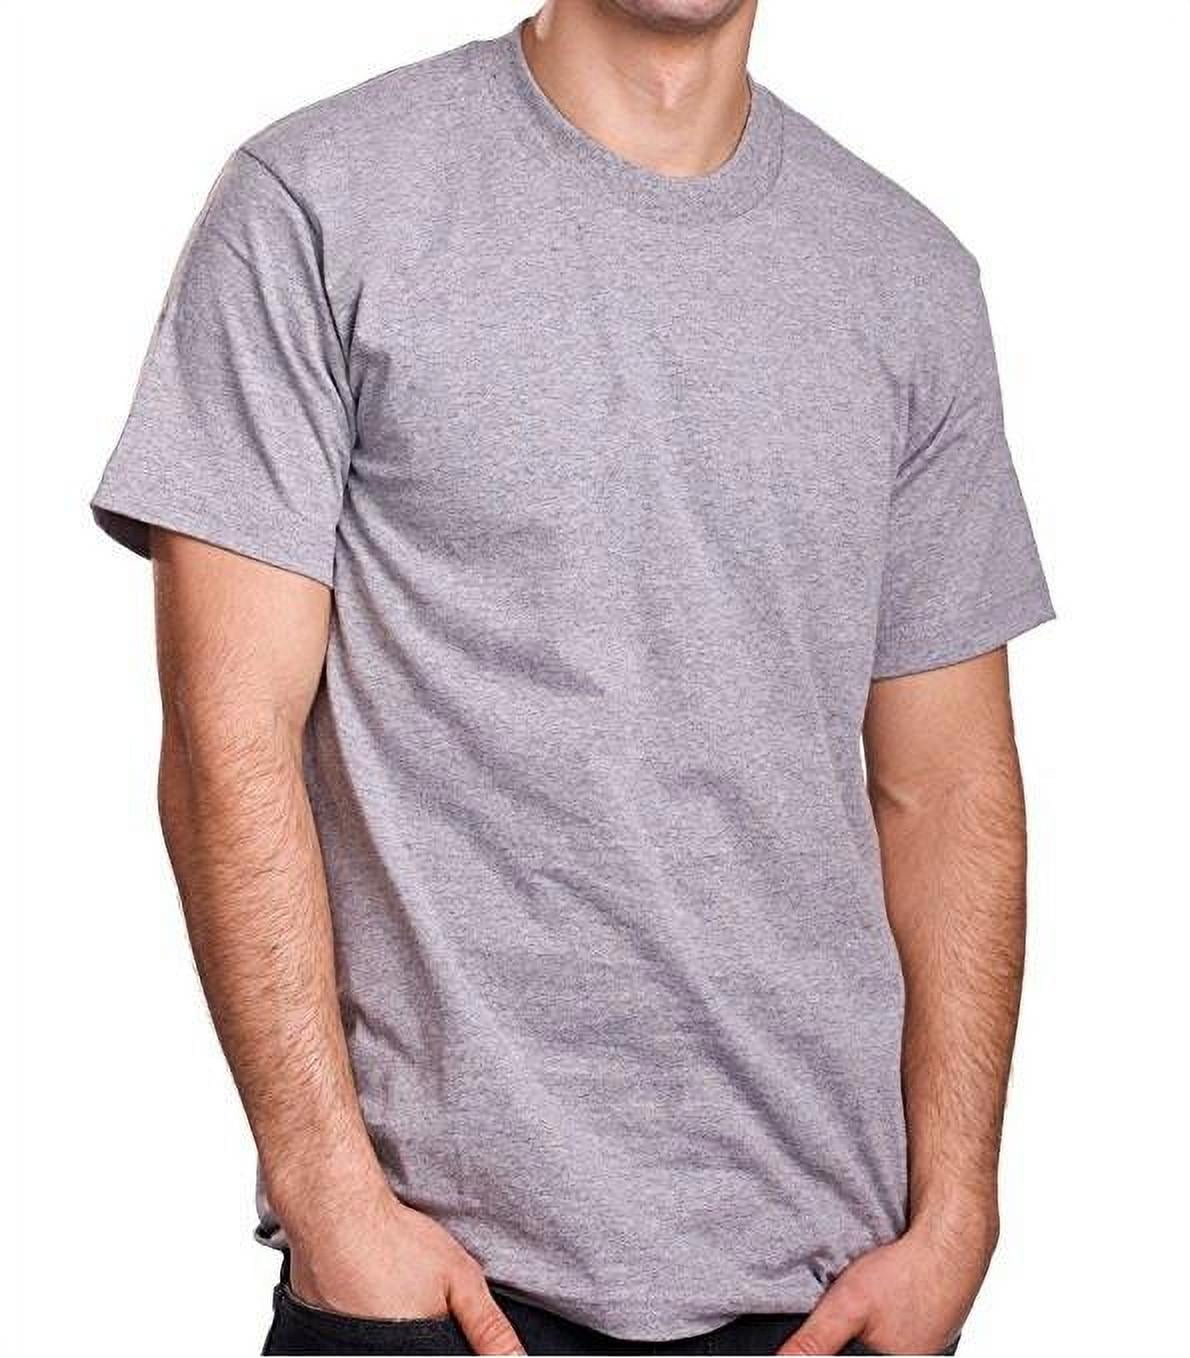 Pro 5 Sleeve T-shirt,Heather - Walmart.com